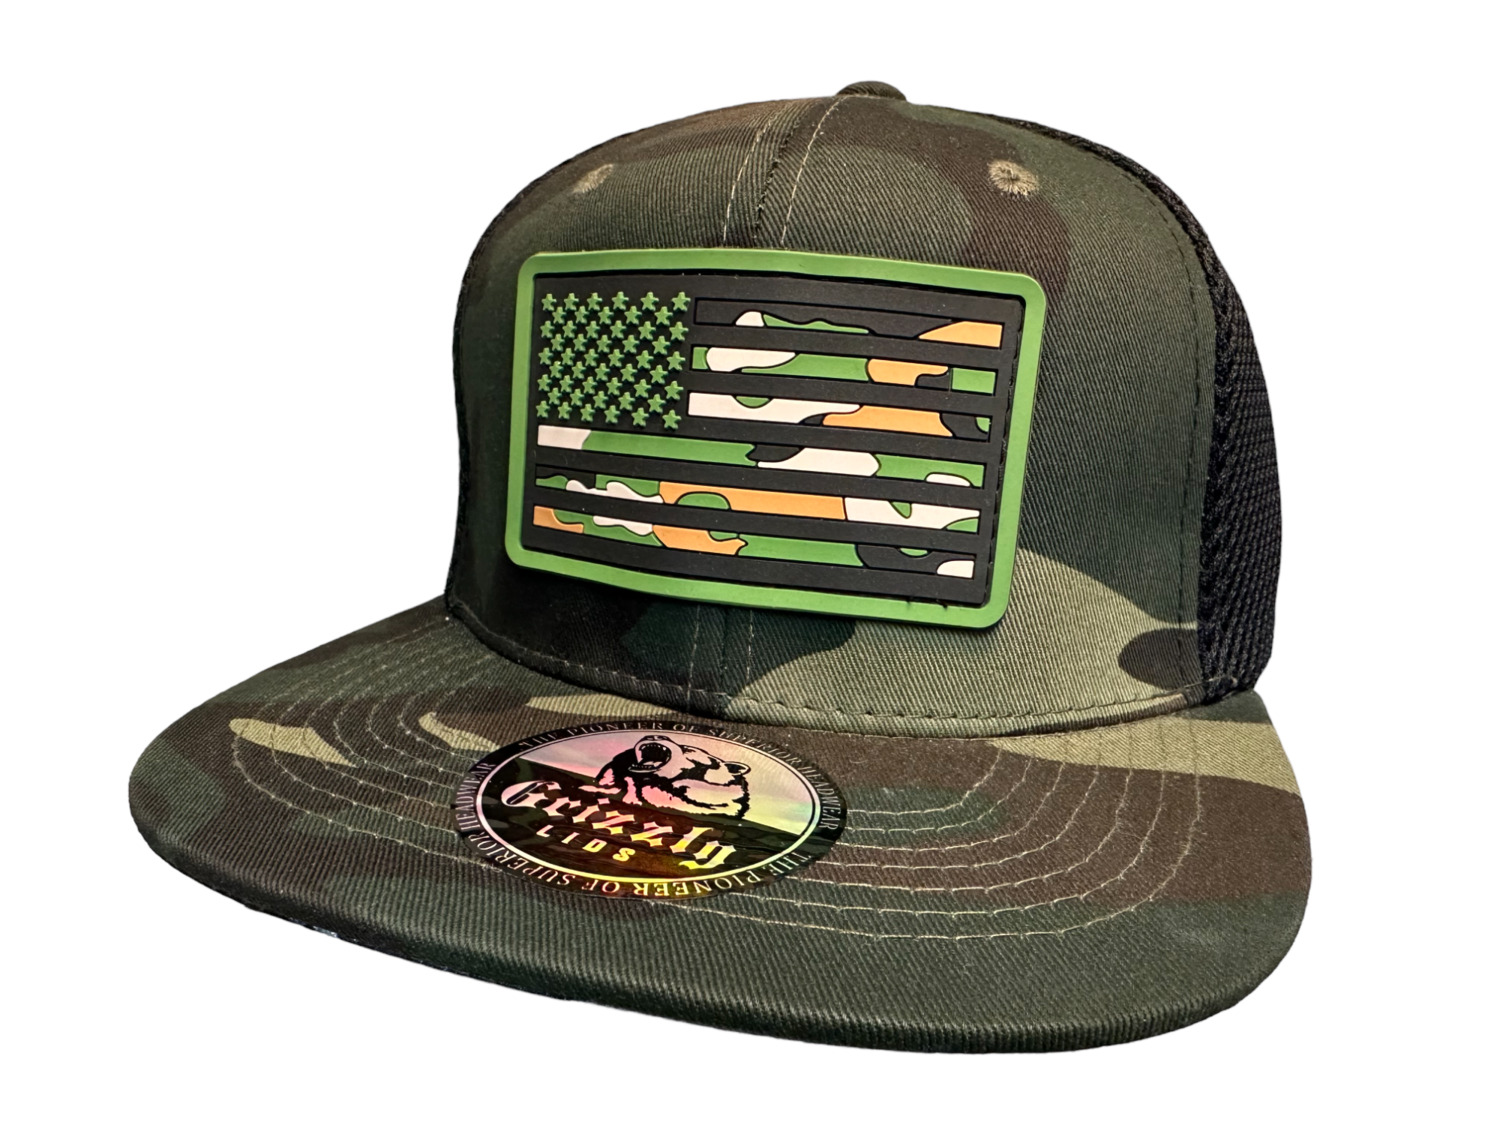 USA Rubber Flag Snapback 6 Panel Adjustable Snap Fit Hat